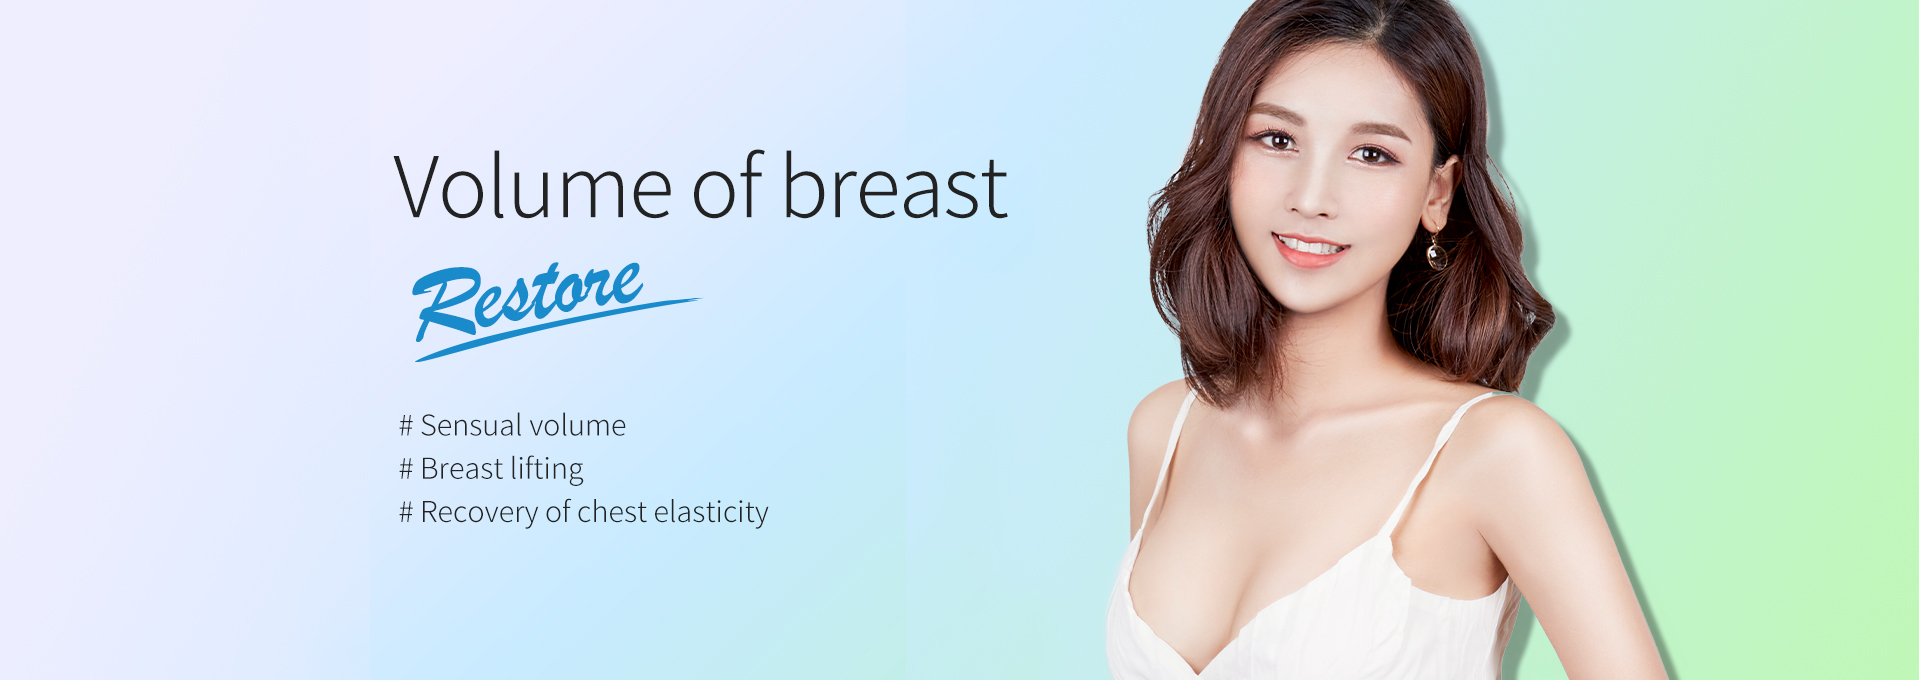 Volume of breast restore